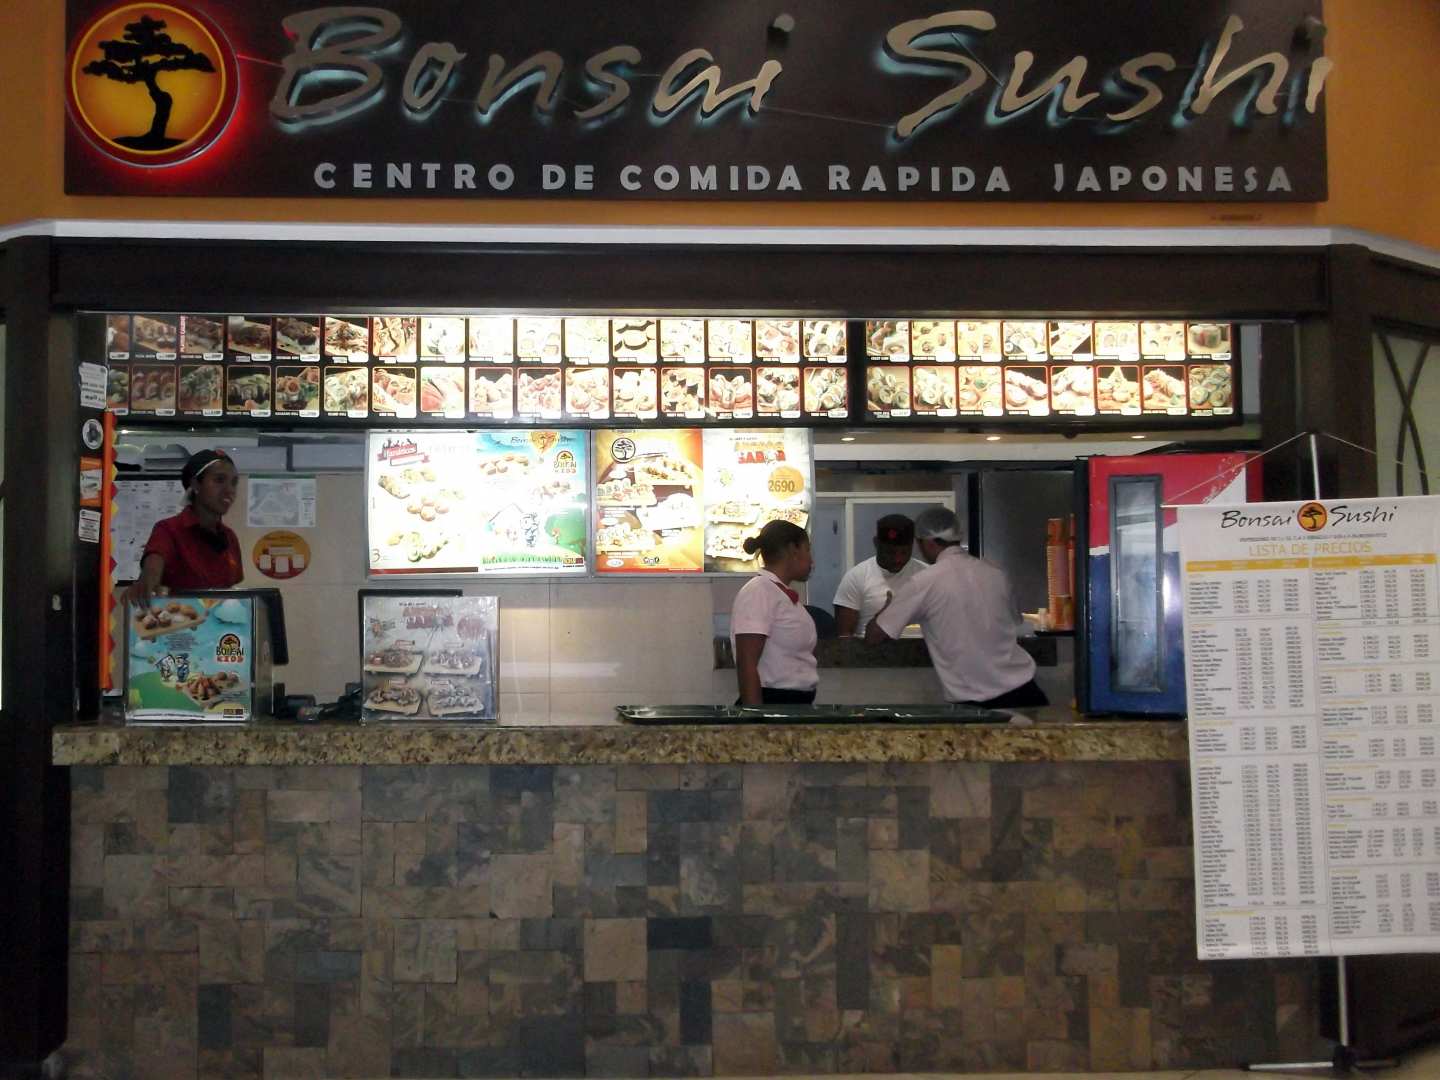 Bonsai Sushi (C. C. Sambil Nivel Feria)